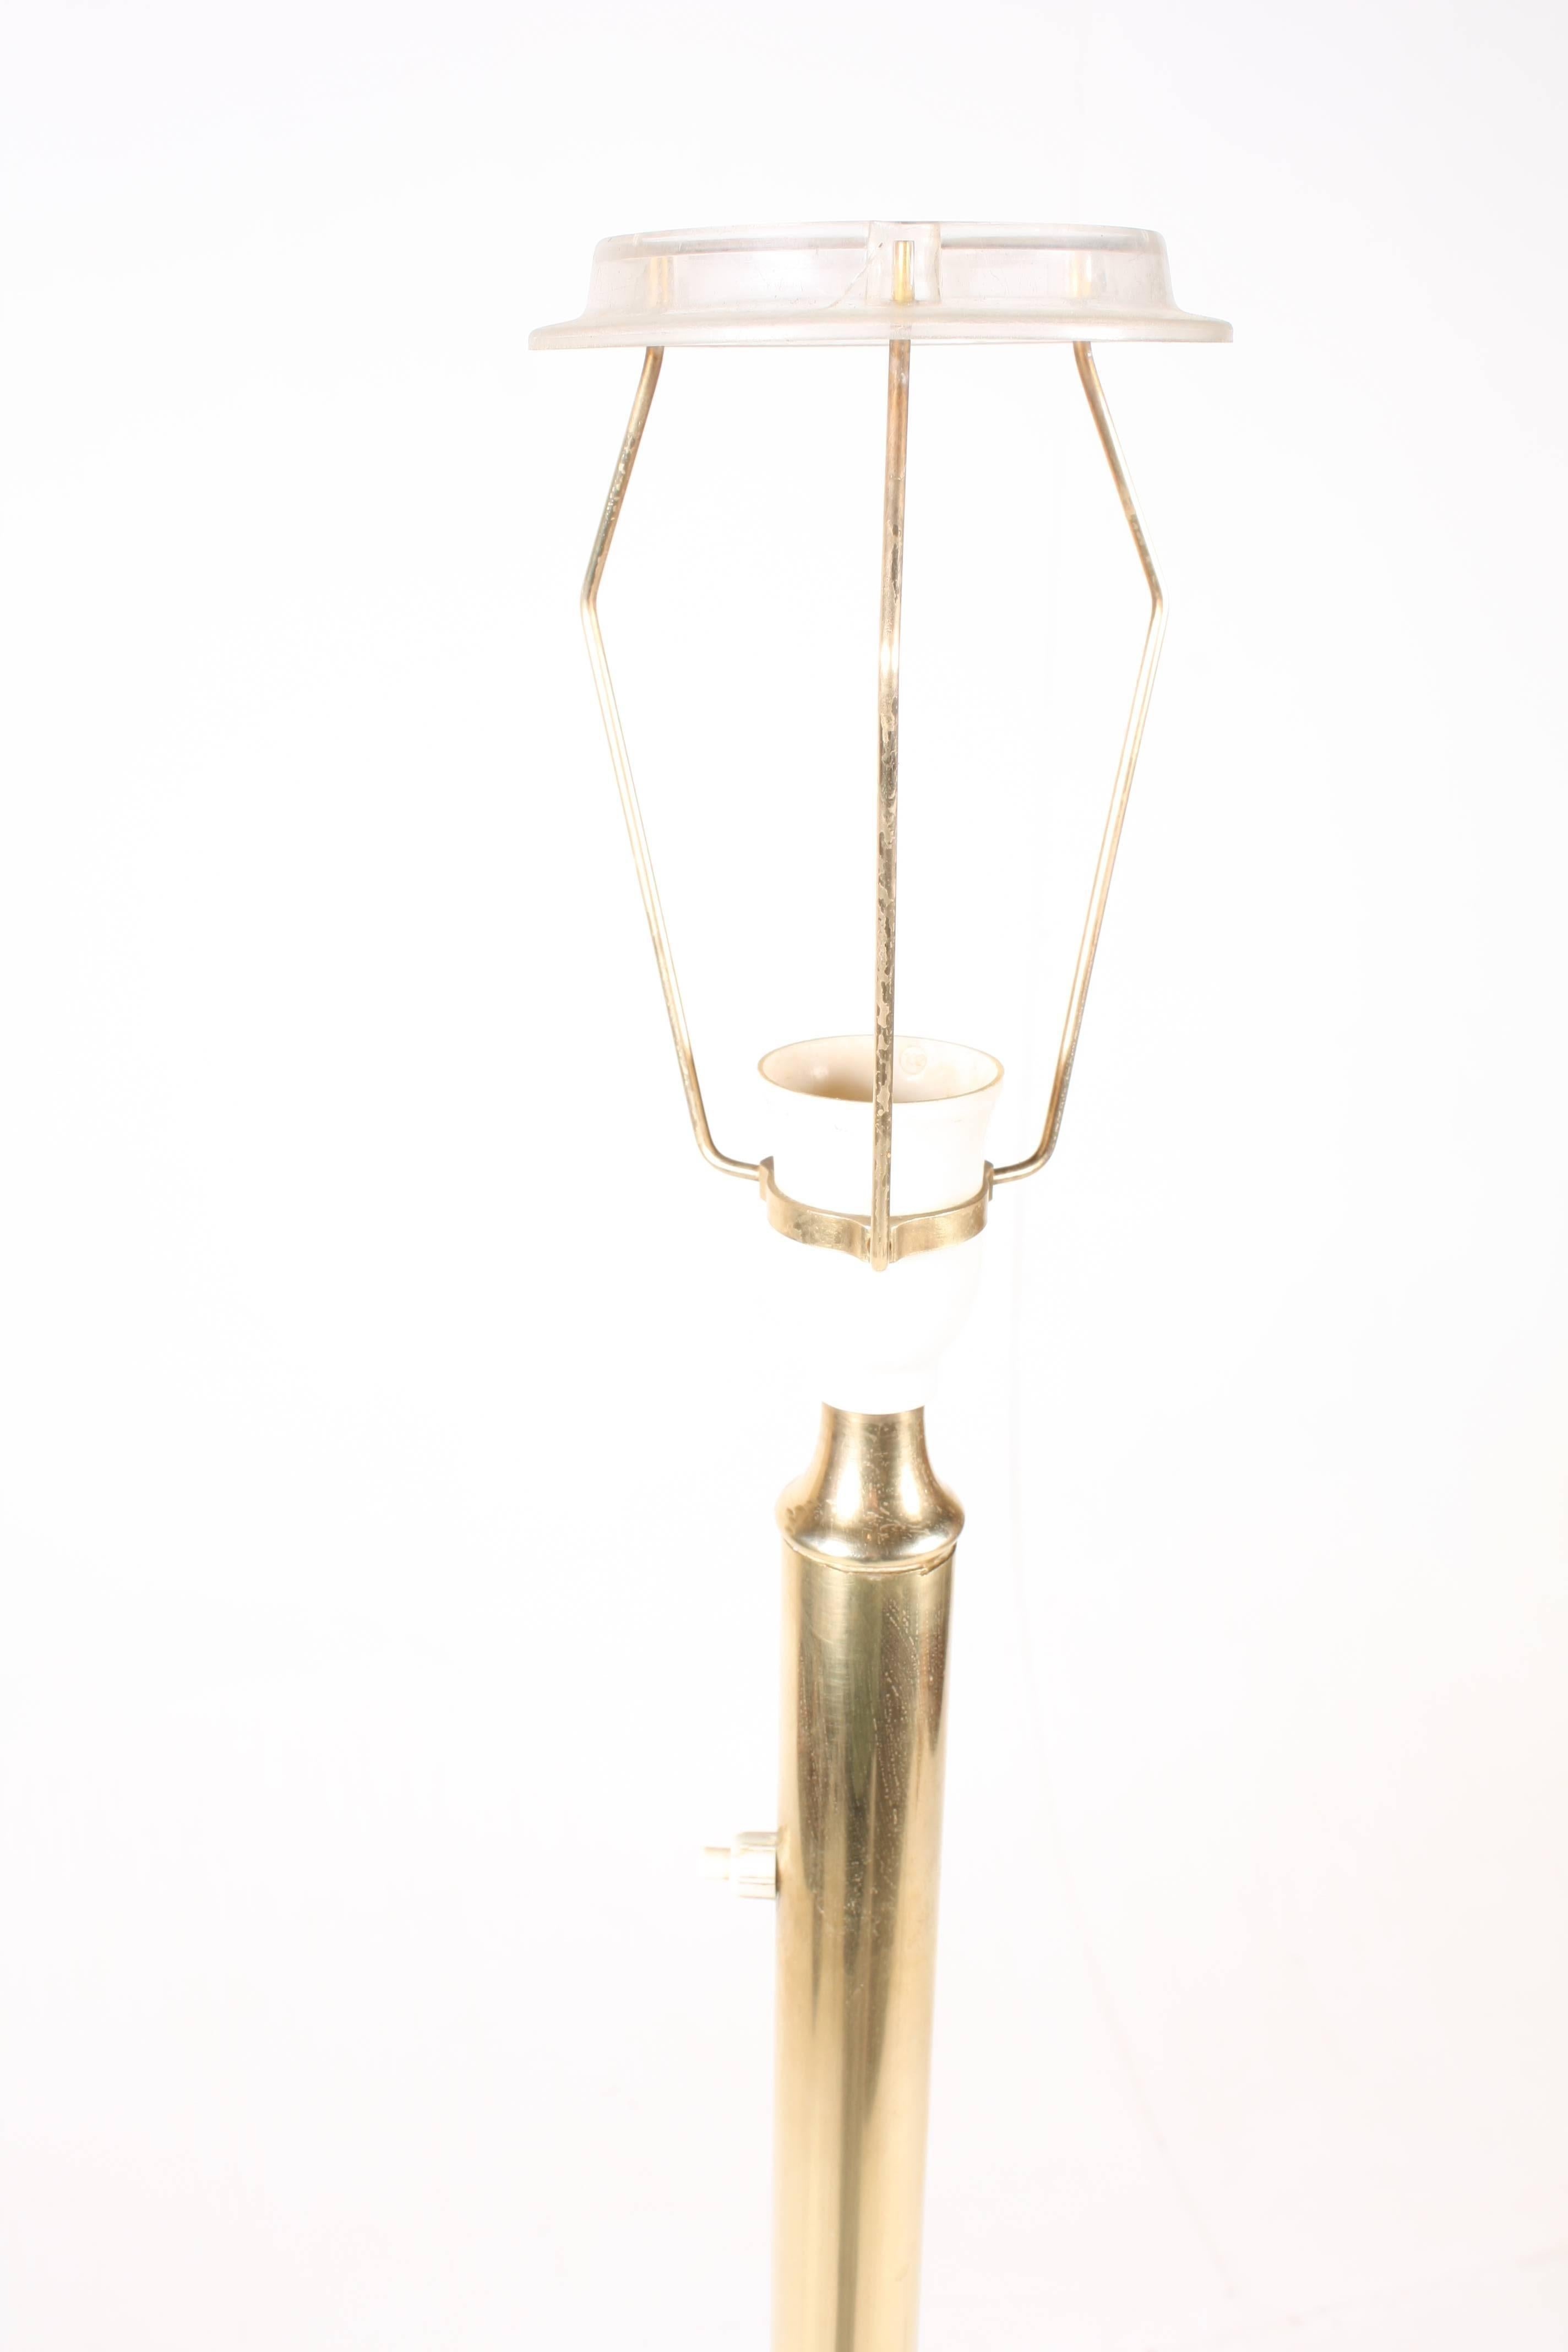 Scandinavian Modern Danish Brass Floor Lamp from the 1940s